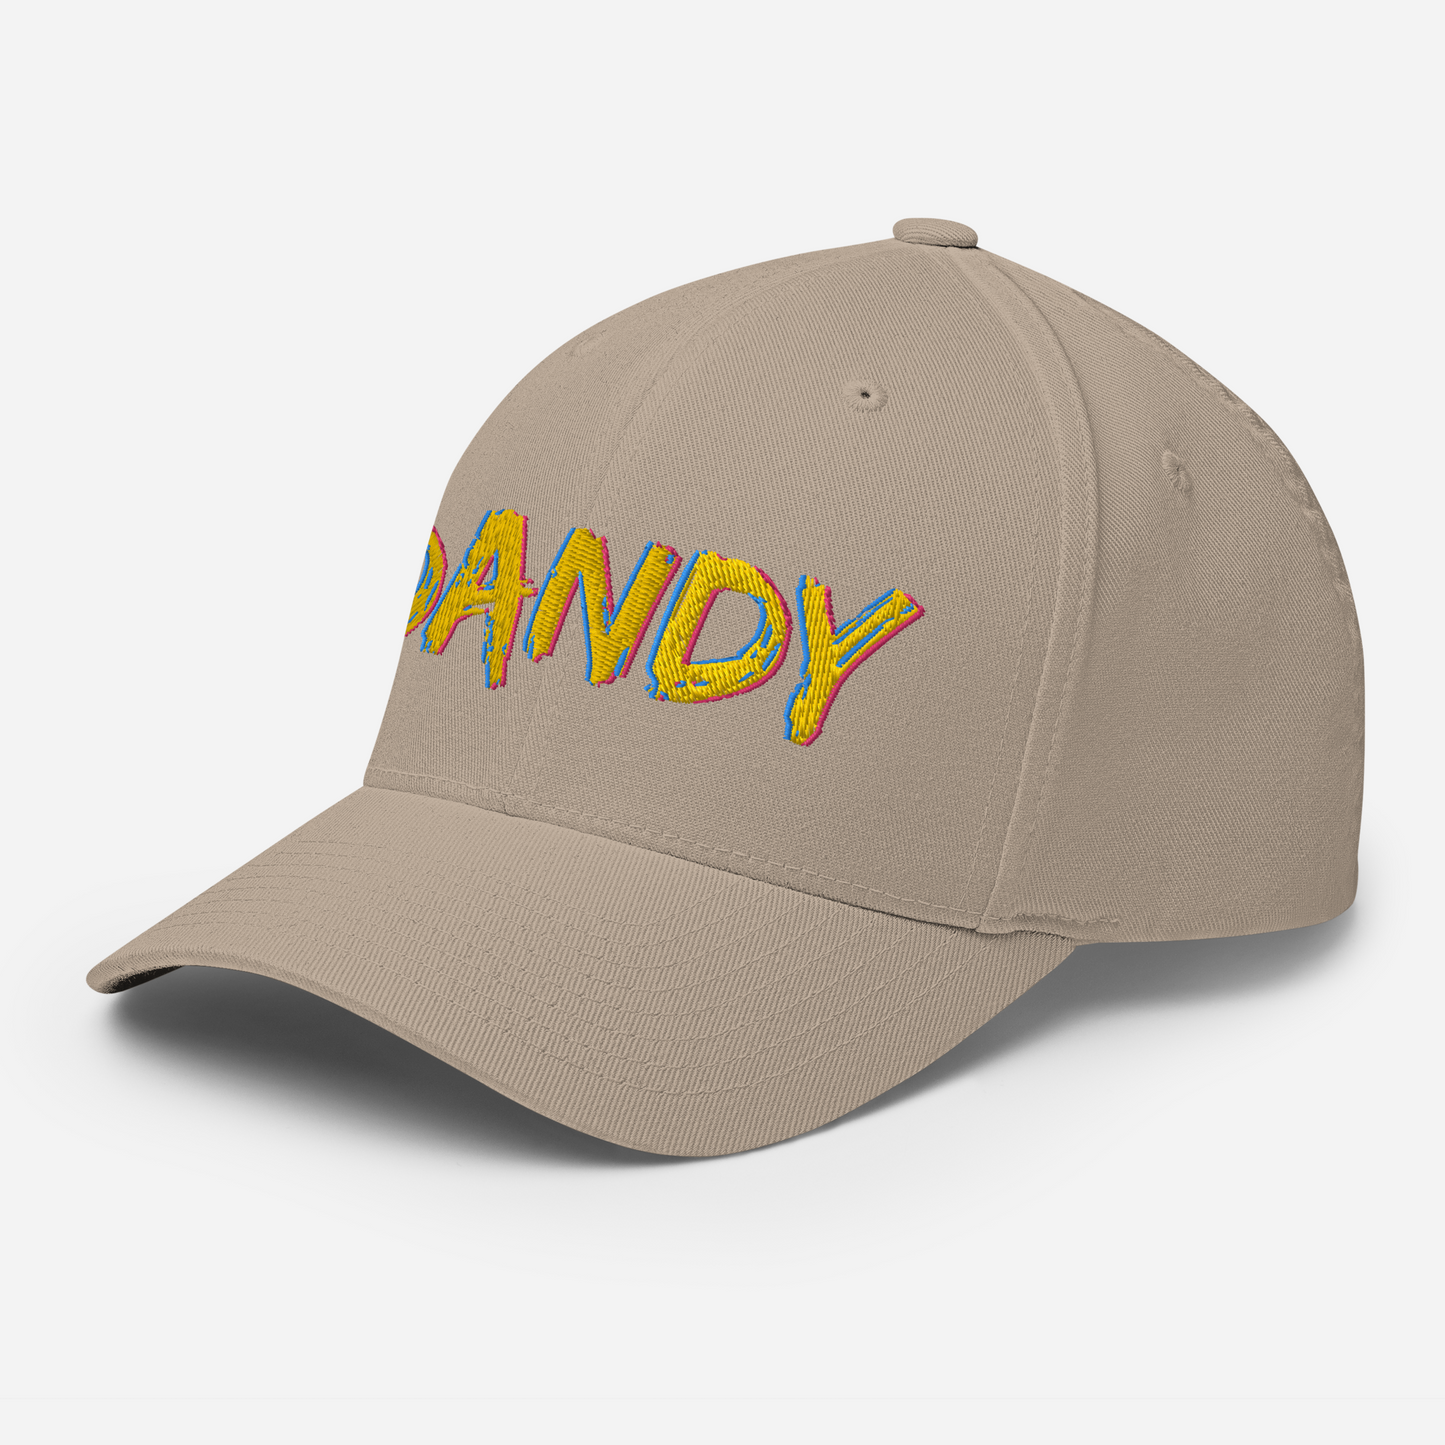 Dandy Structured Twill Cap